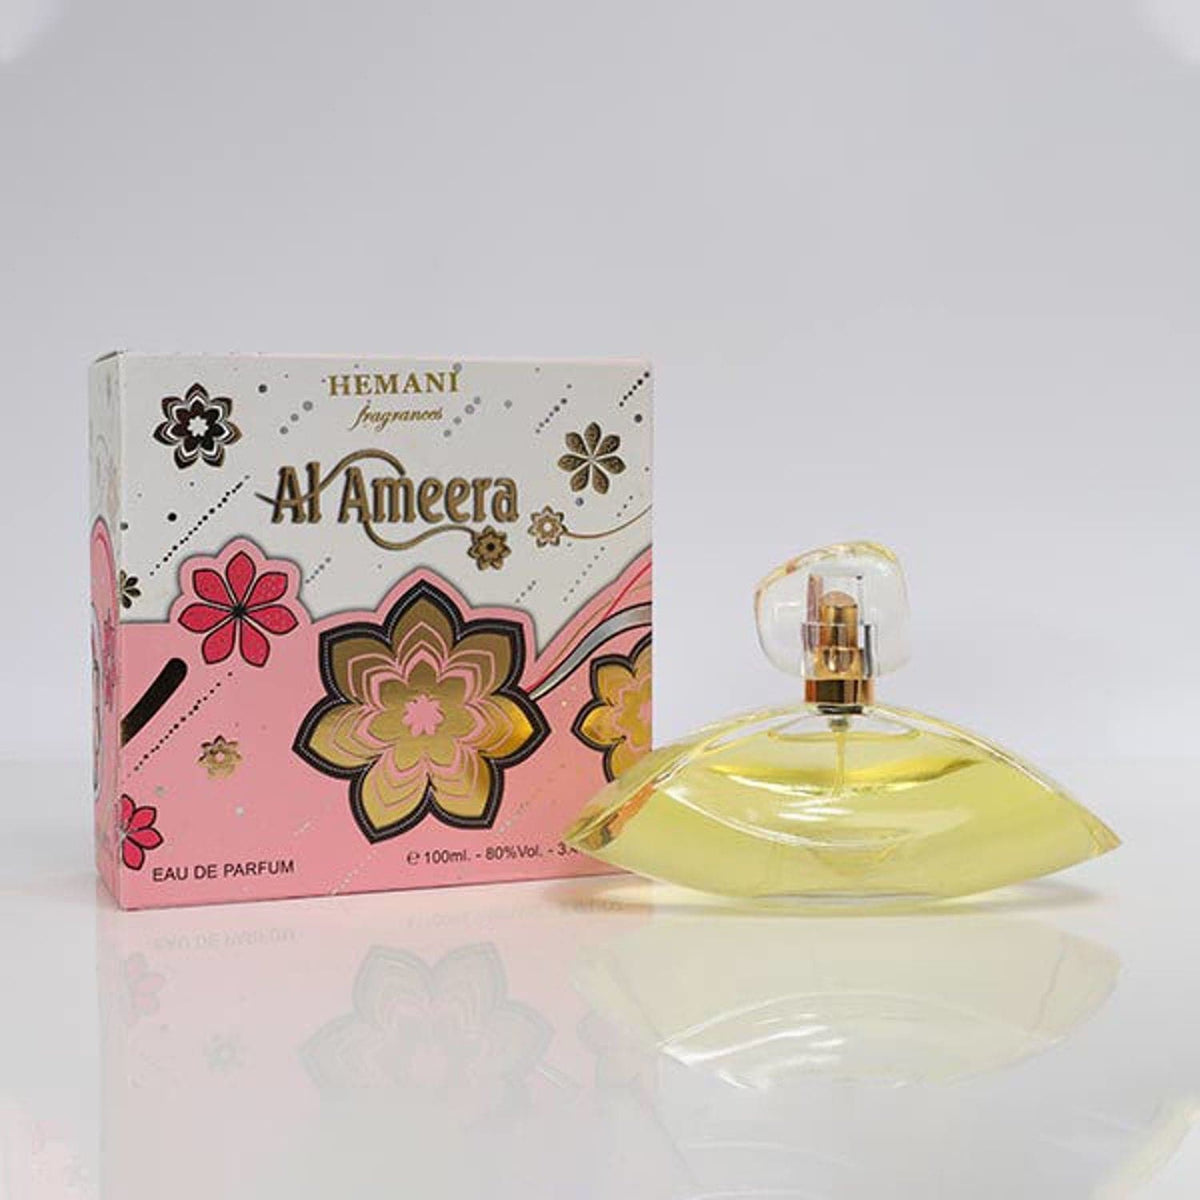 Hemani Al Ameera Perfume 100Ml - Premium  from Hemani - Just Rs 700.00! Shop now at Cozmetica